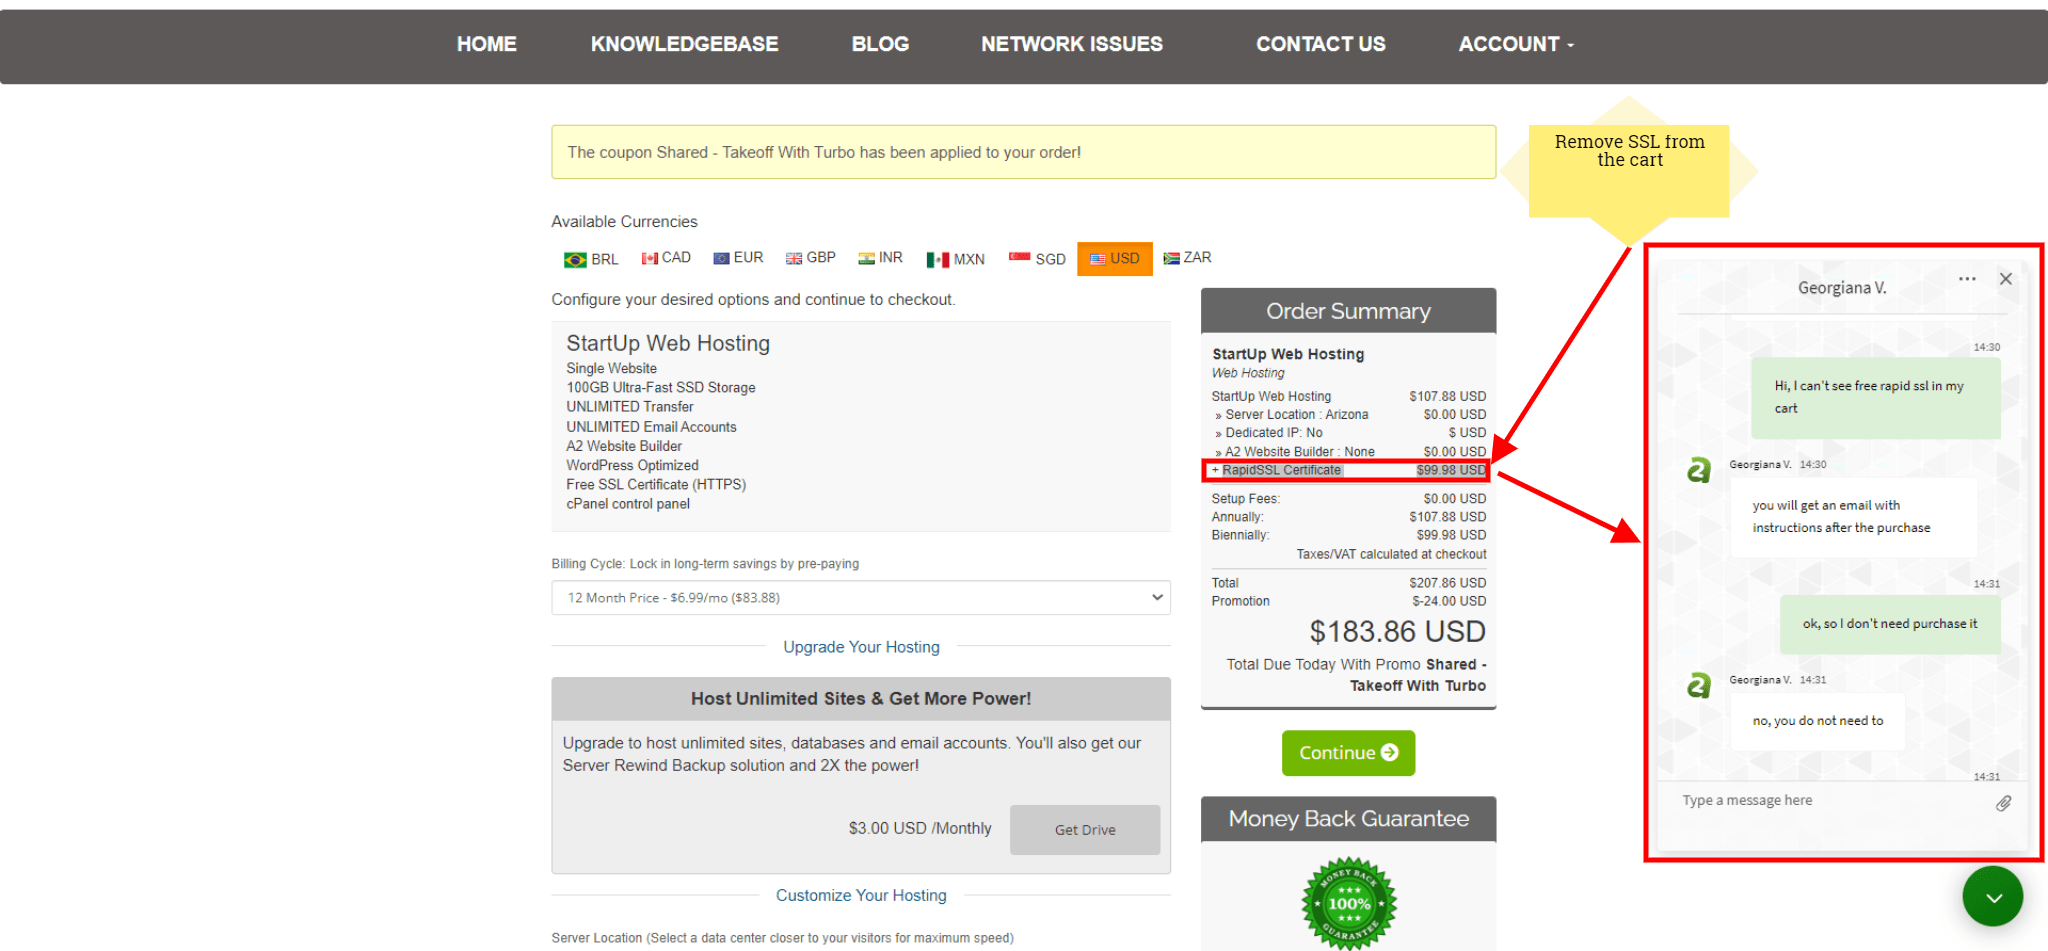 a2hosting free rapid ssl worth $49 on summer sale